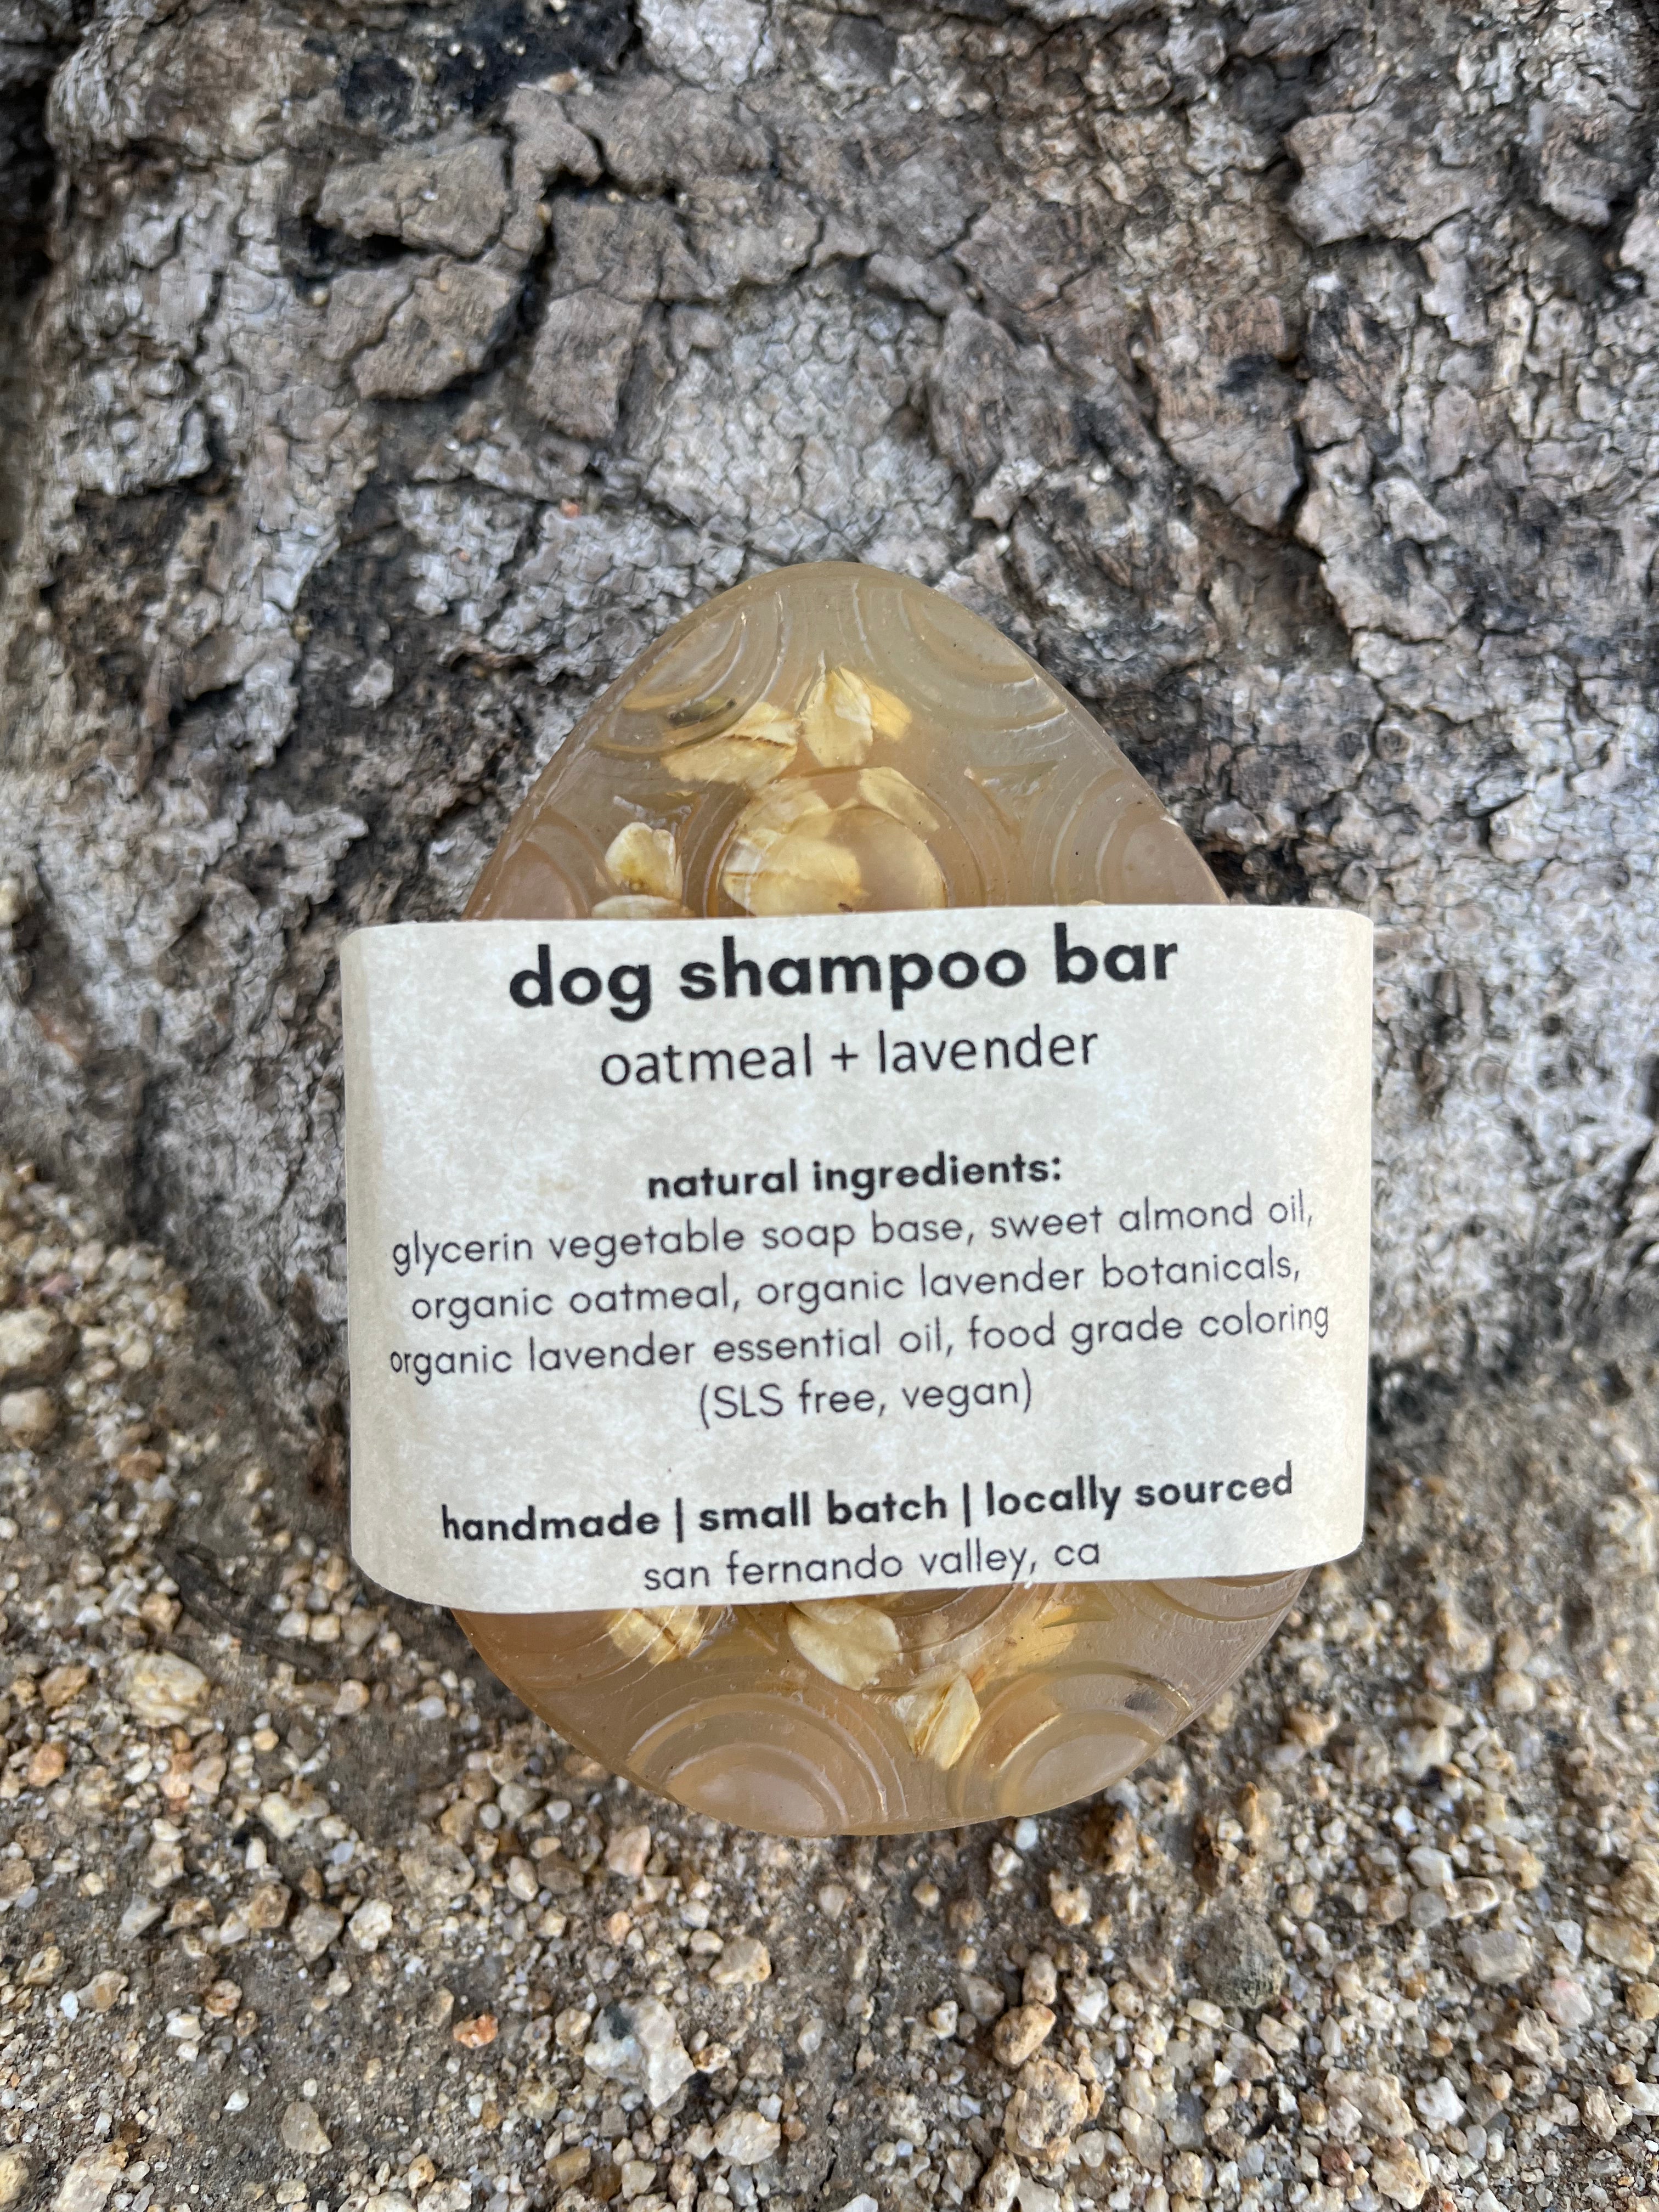 dog shampoo bar (oatmeal + lavender)